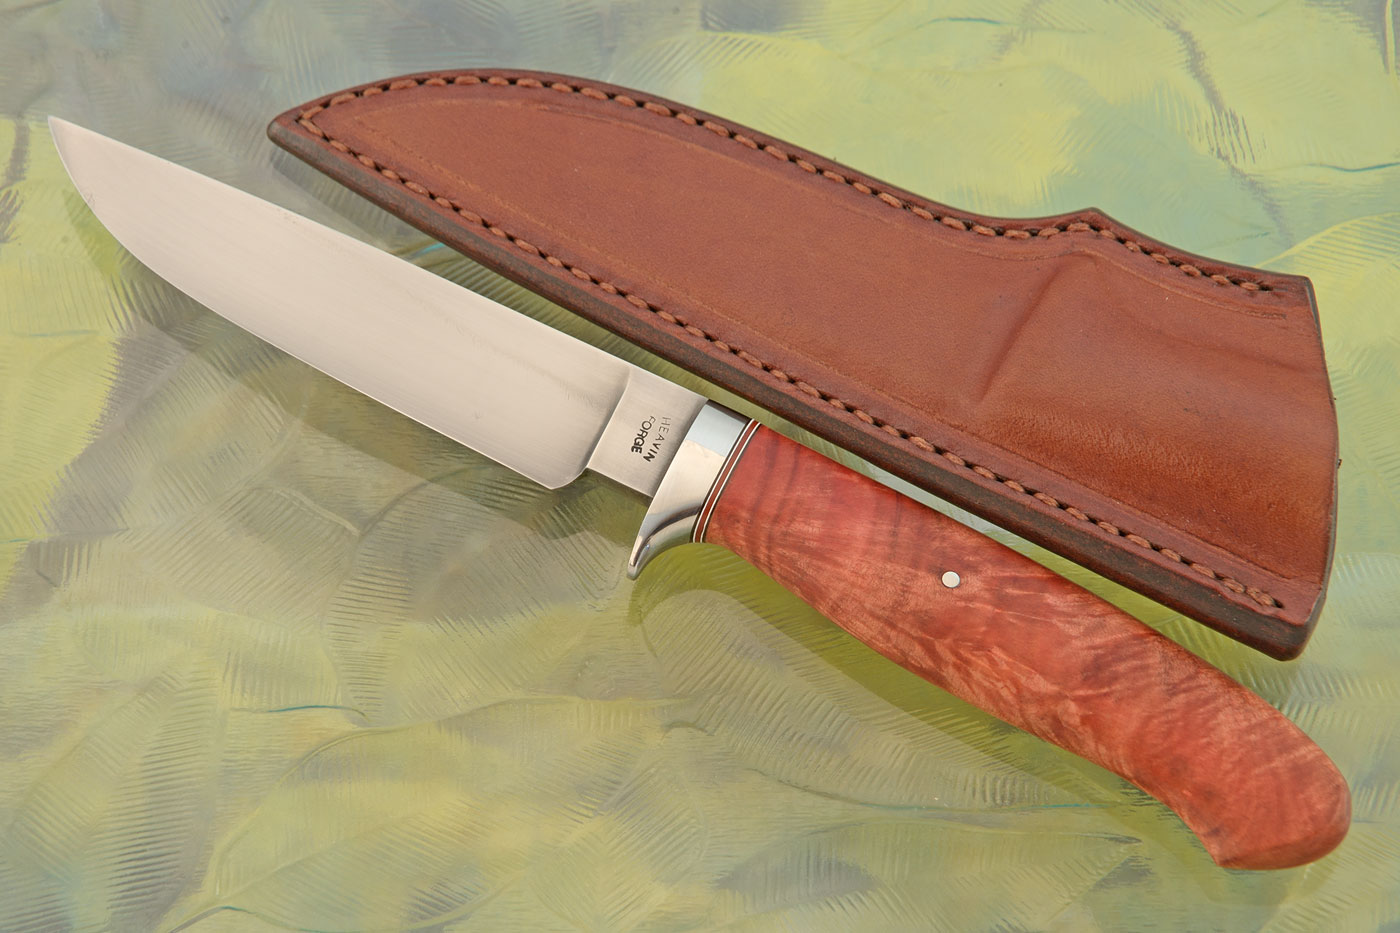 Veld Knife (EDC Utility) with Red Ivory